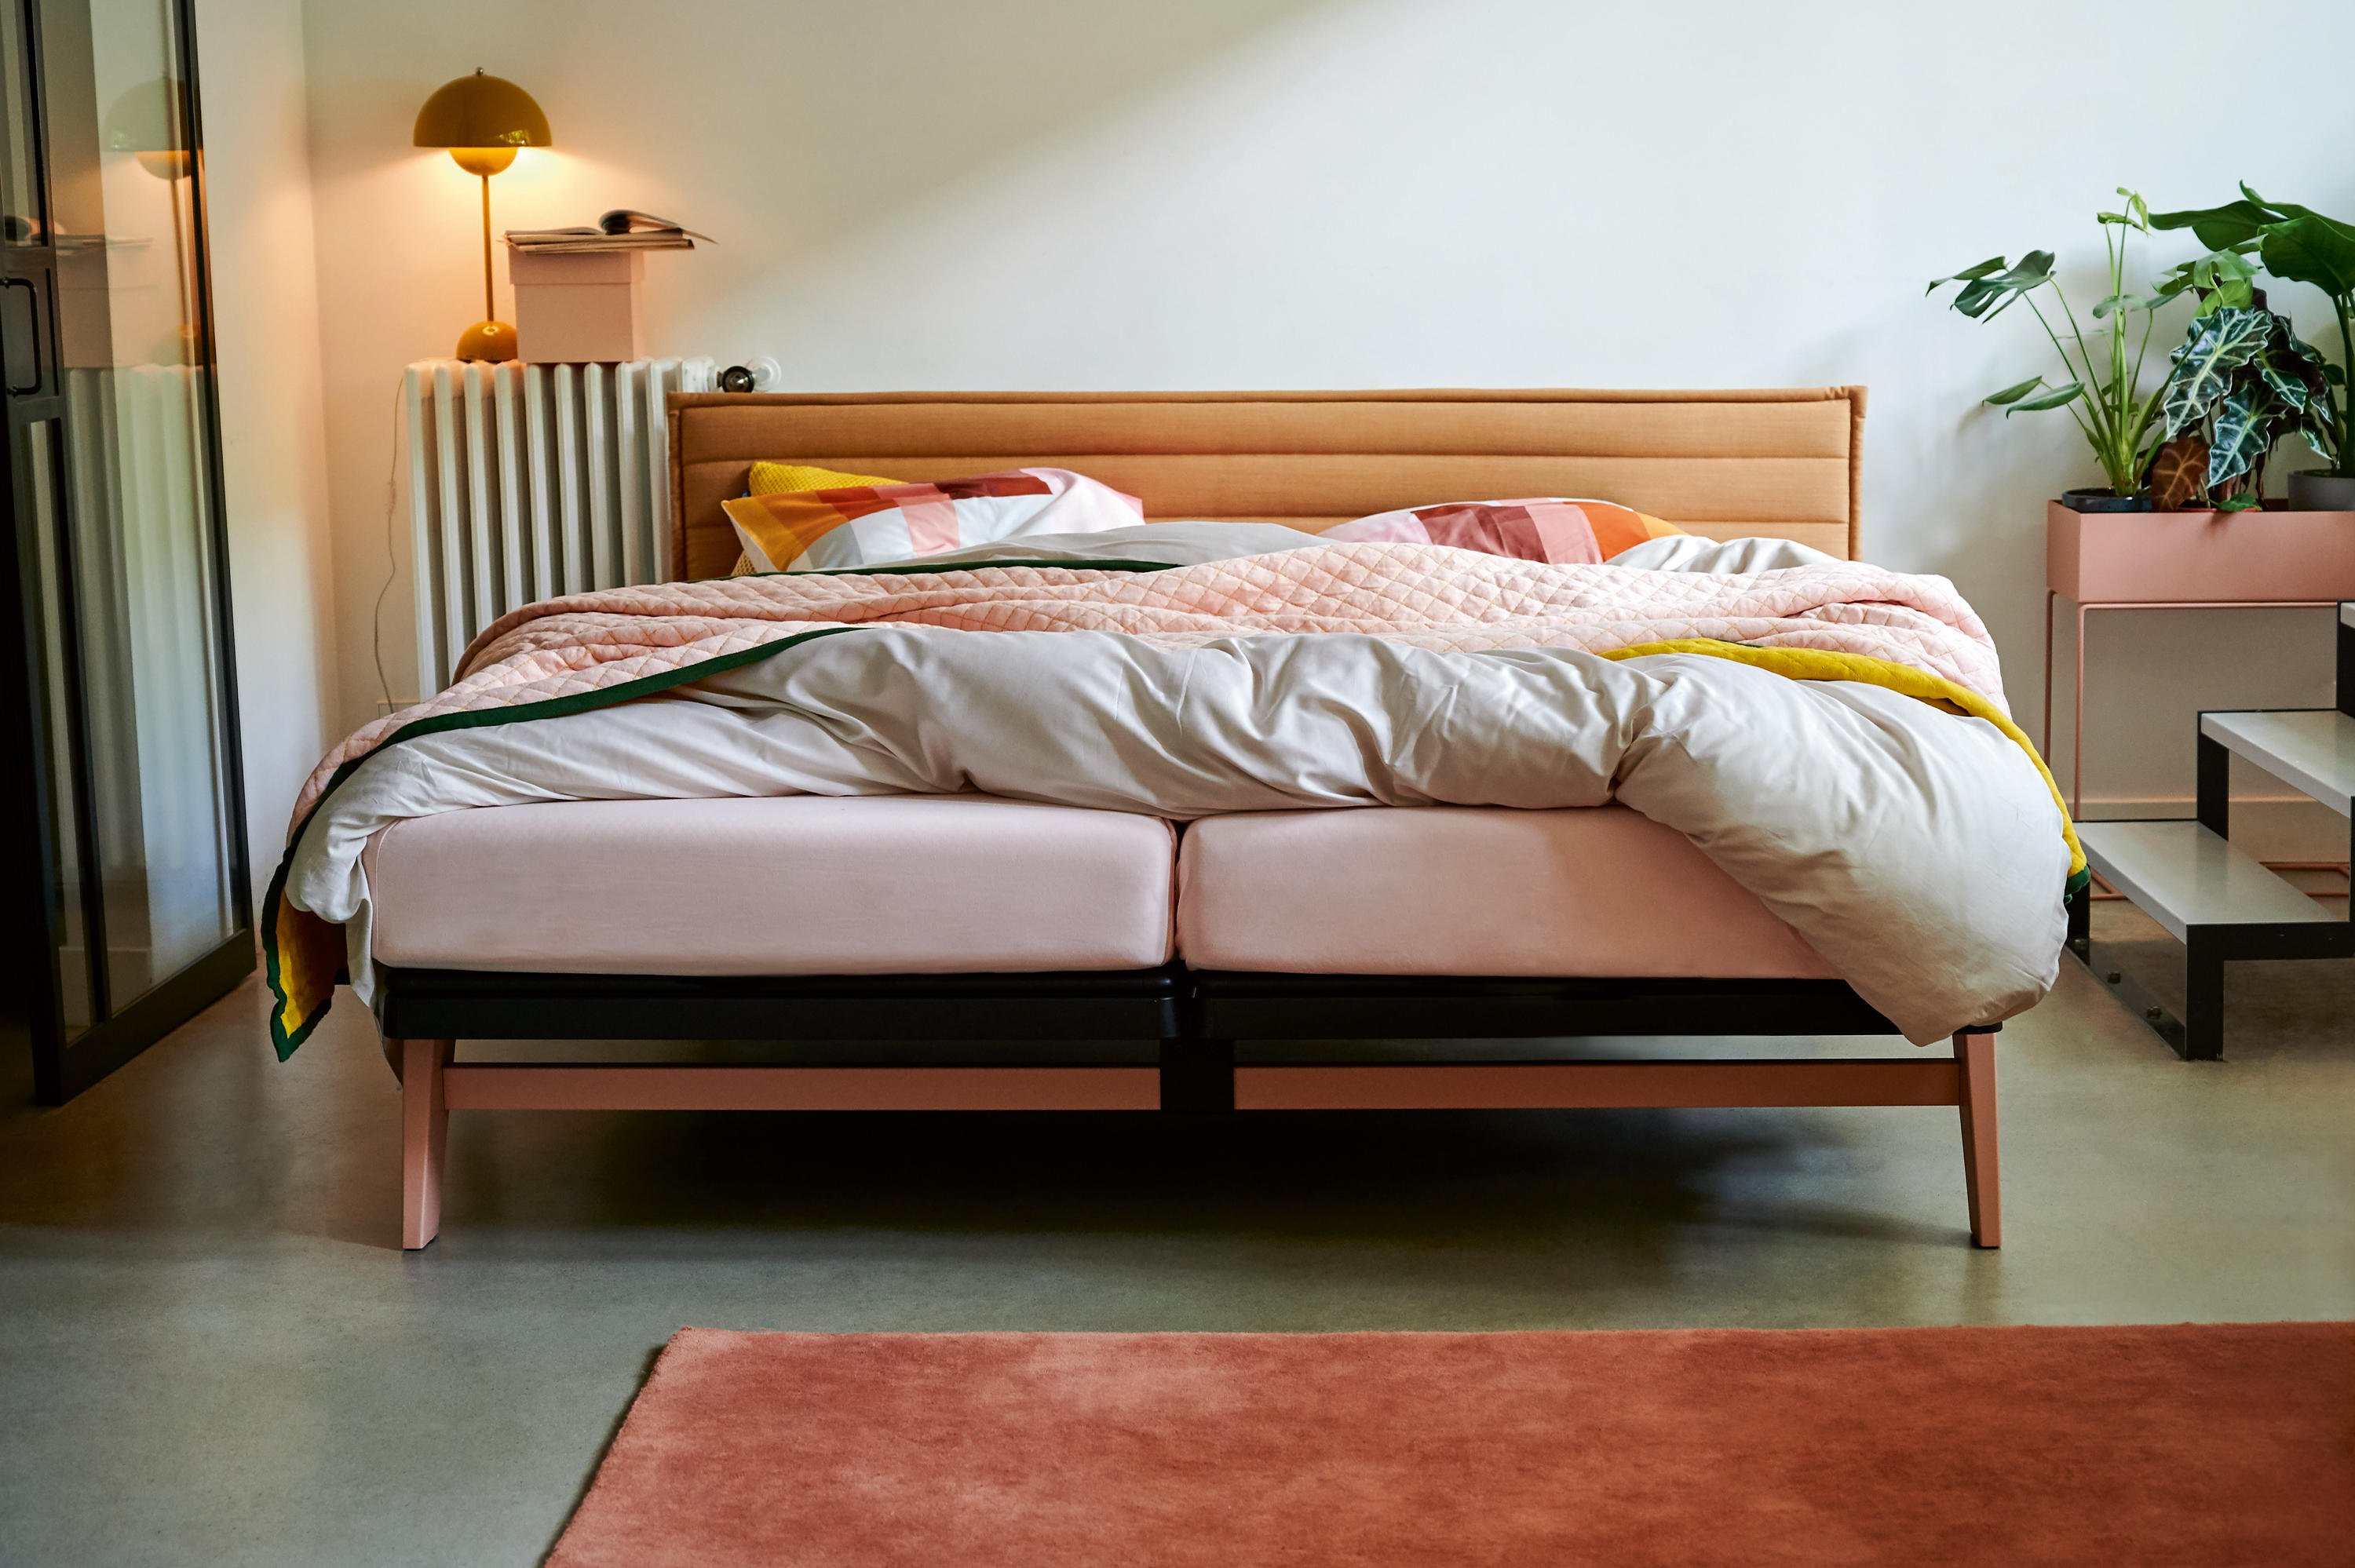 ORIGINAL BED - from Koninklijke Auping | Architonic